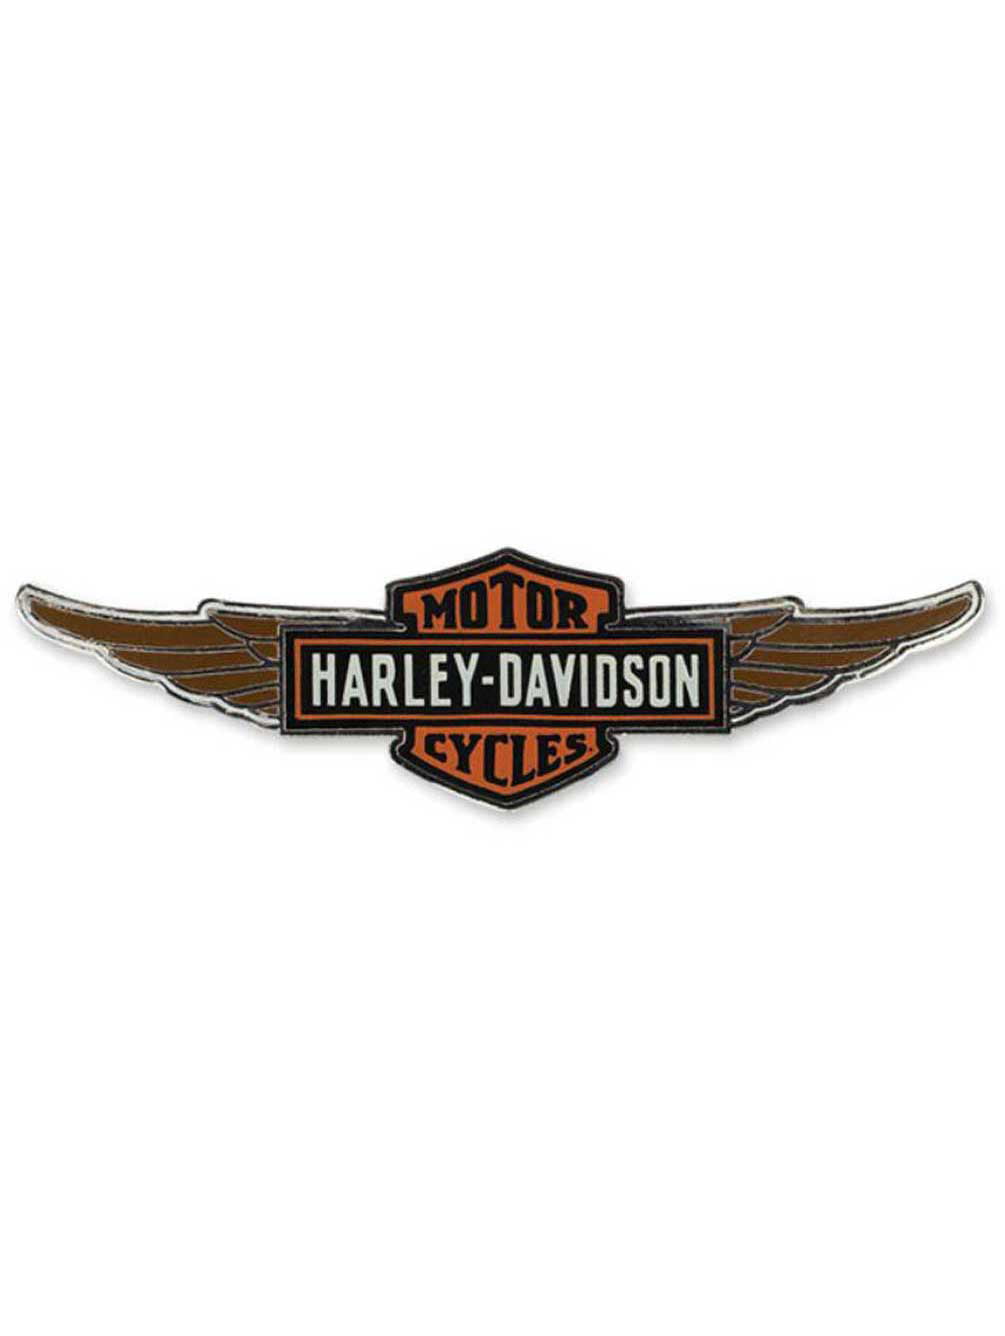 Harley Davidson Vintage Bar & Shield Logo Enamel Pin Badge 